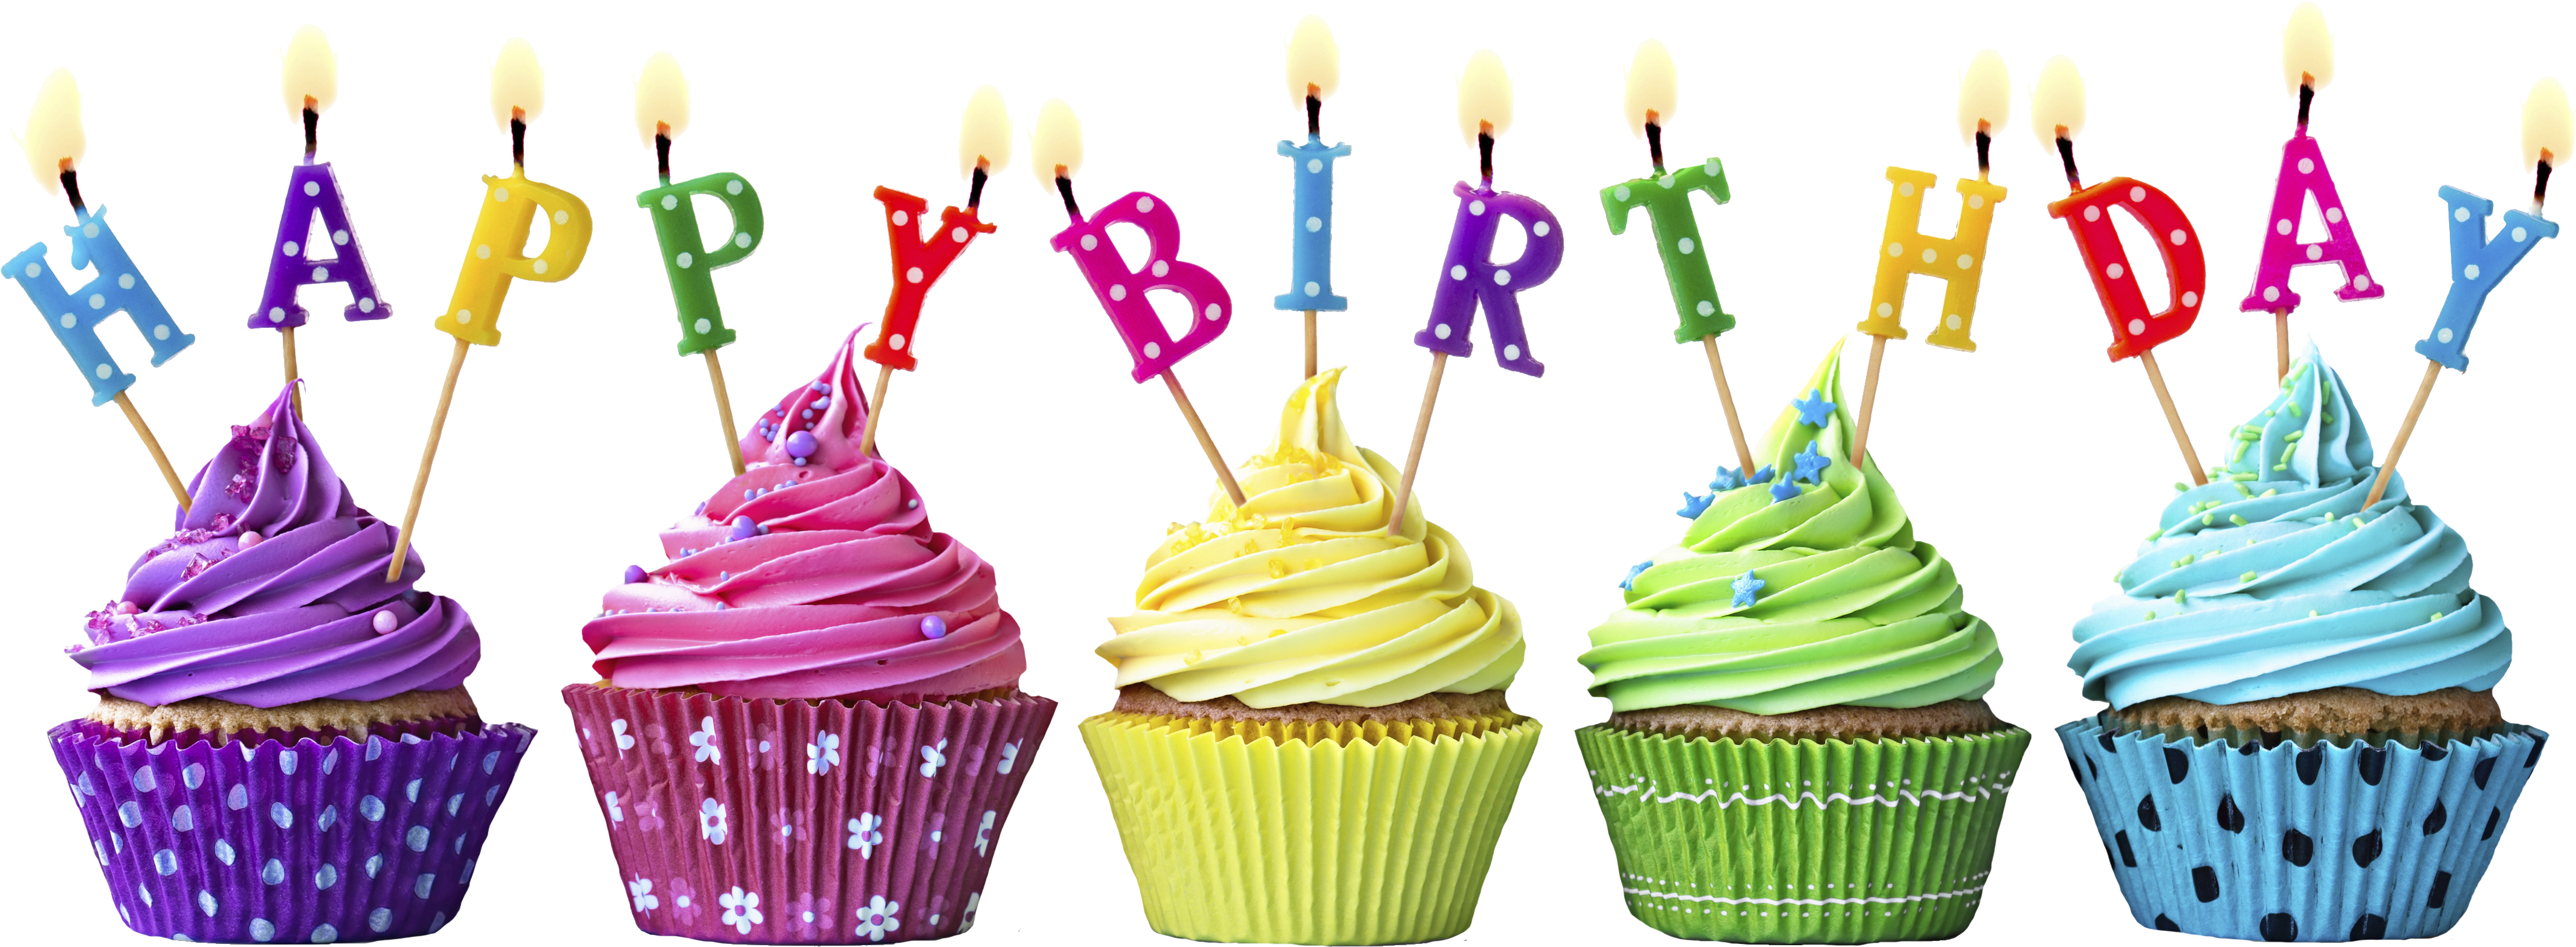 Happy Birthday Cakes - Happy Birthday Cake Png (4833x2432)